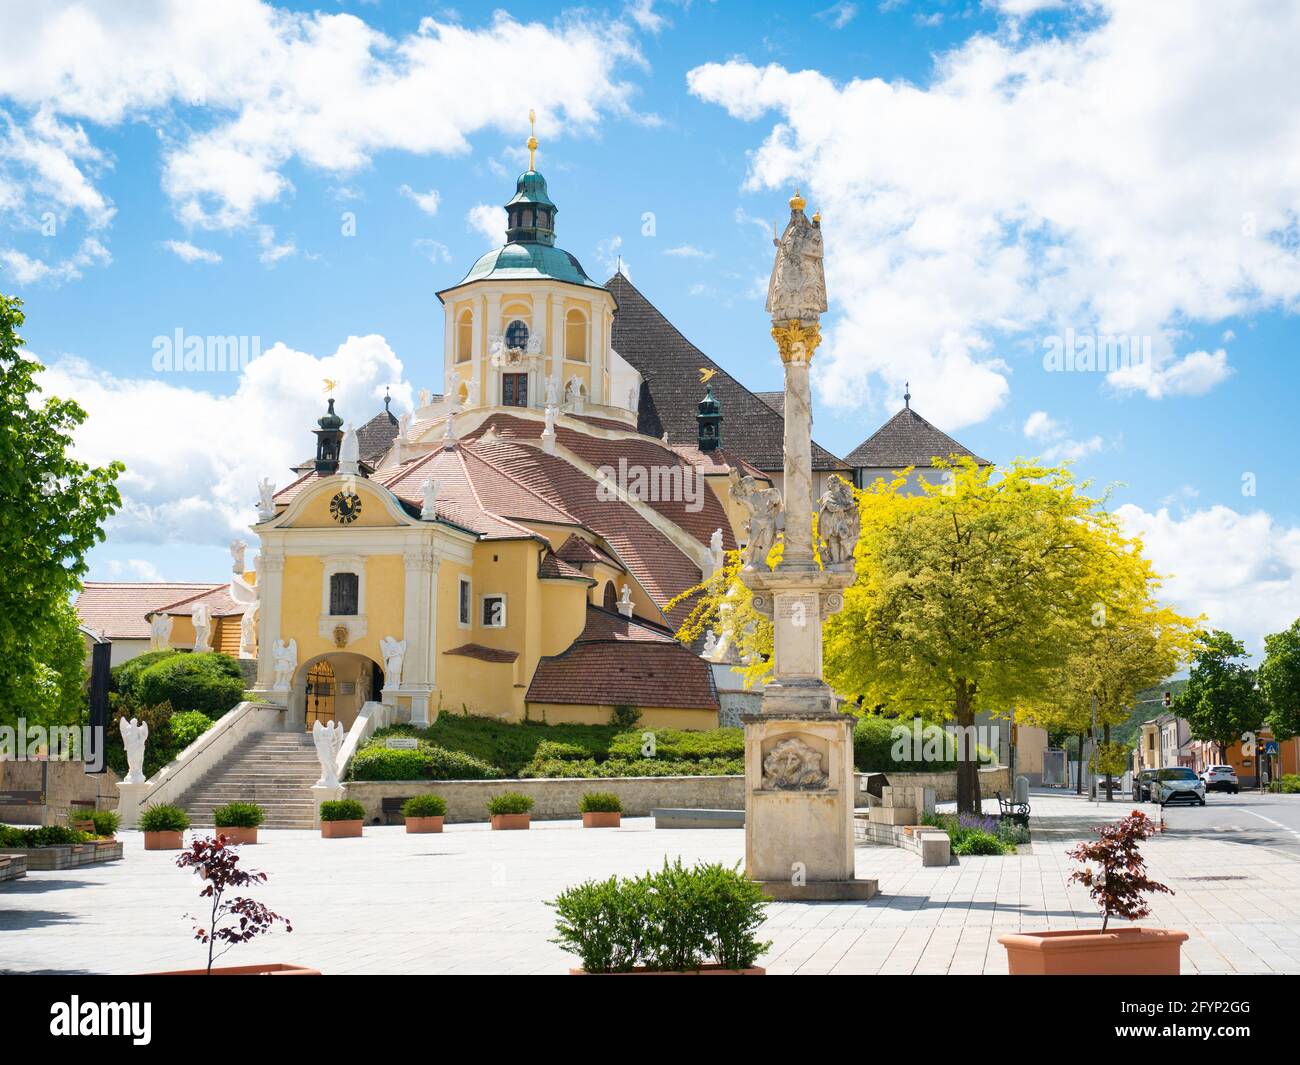 Bergkirche in Eisenstadt. Famous religious building in Burgenland, Austria during summer. Stock Photo